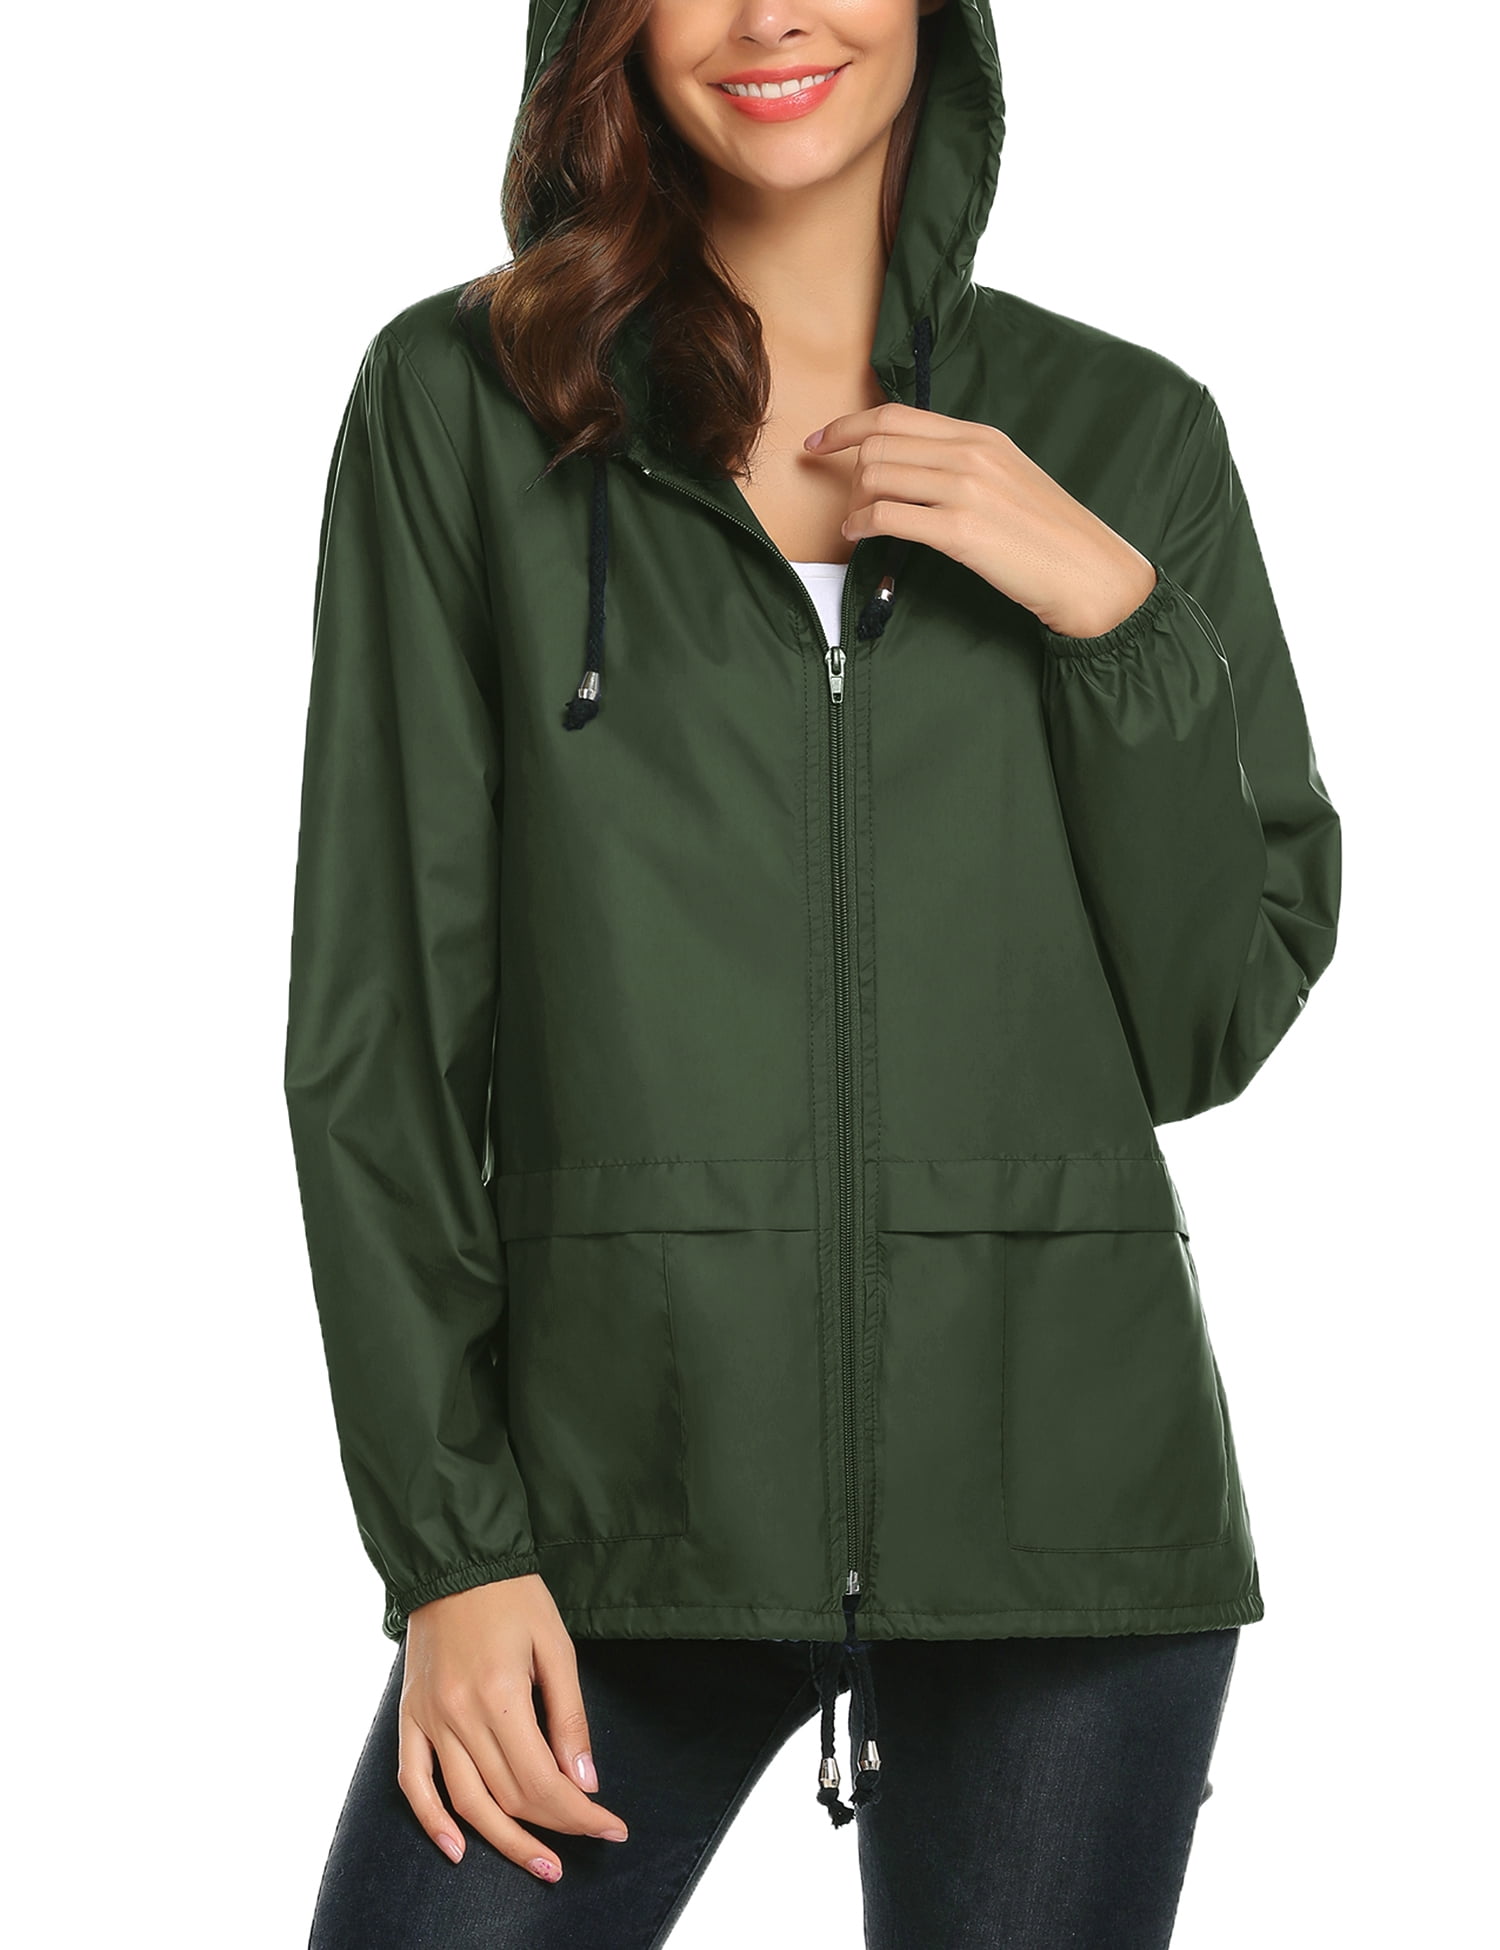 Avoogue Rain Jackets Women Waterproof Raincoat Packable Lightweight Hooded Rain Coats Outdoor Travel Windbreaker 